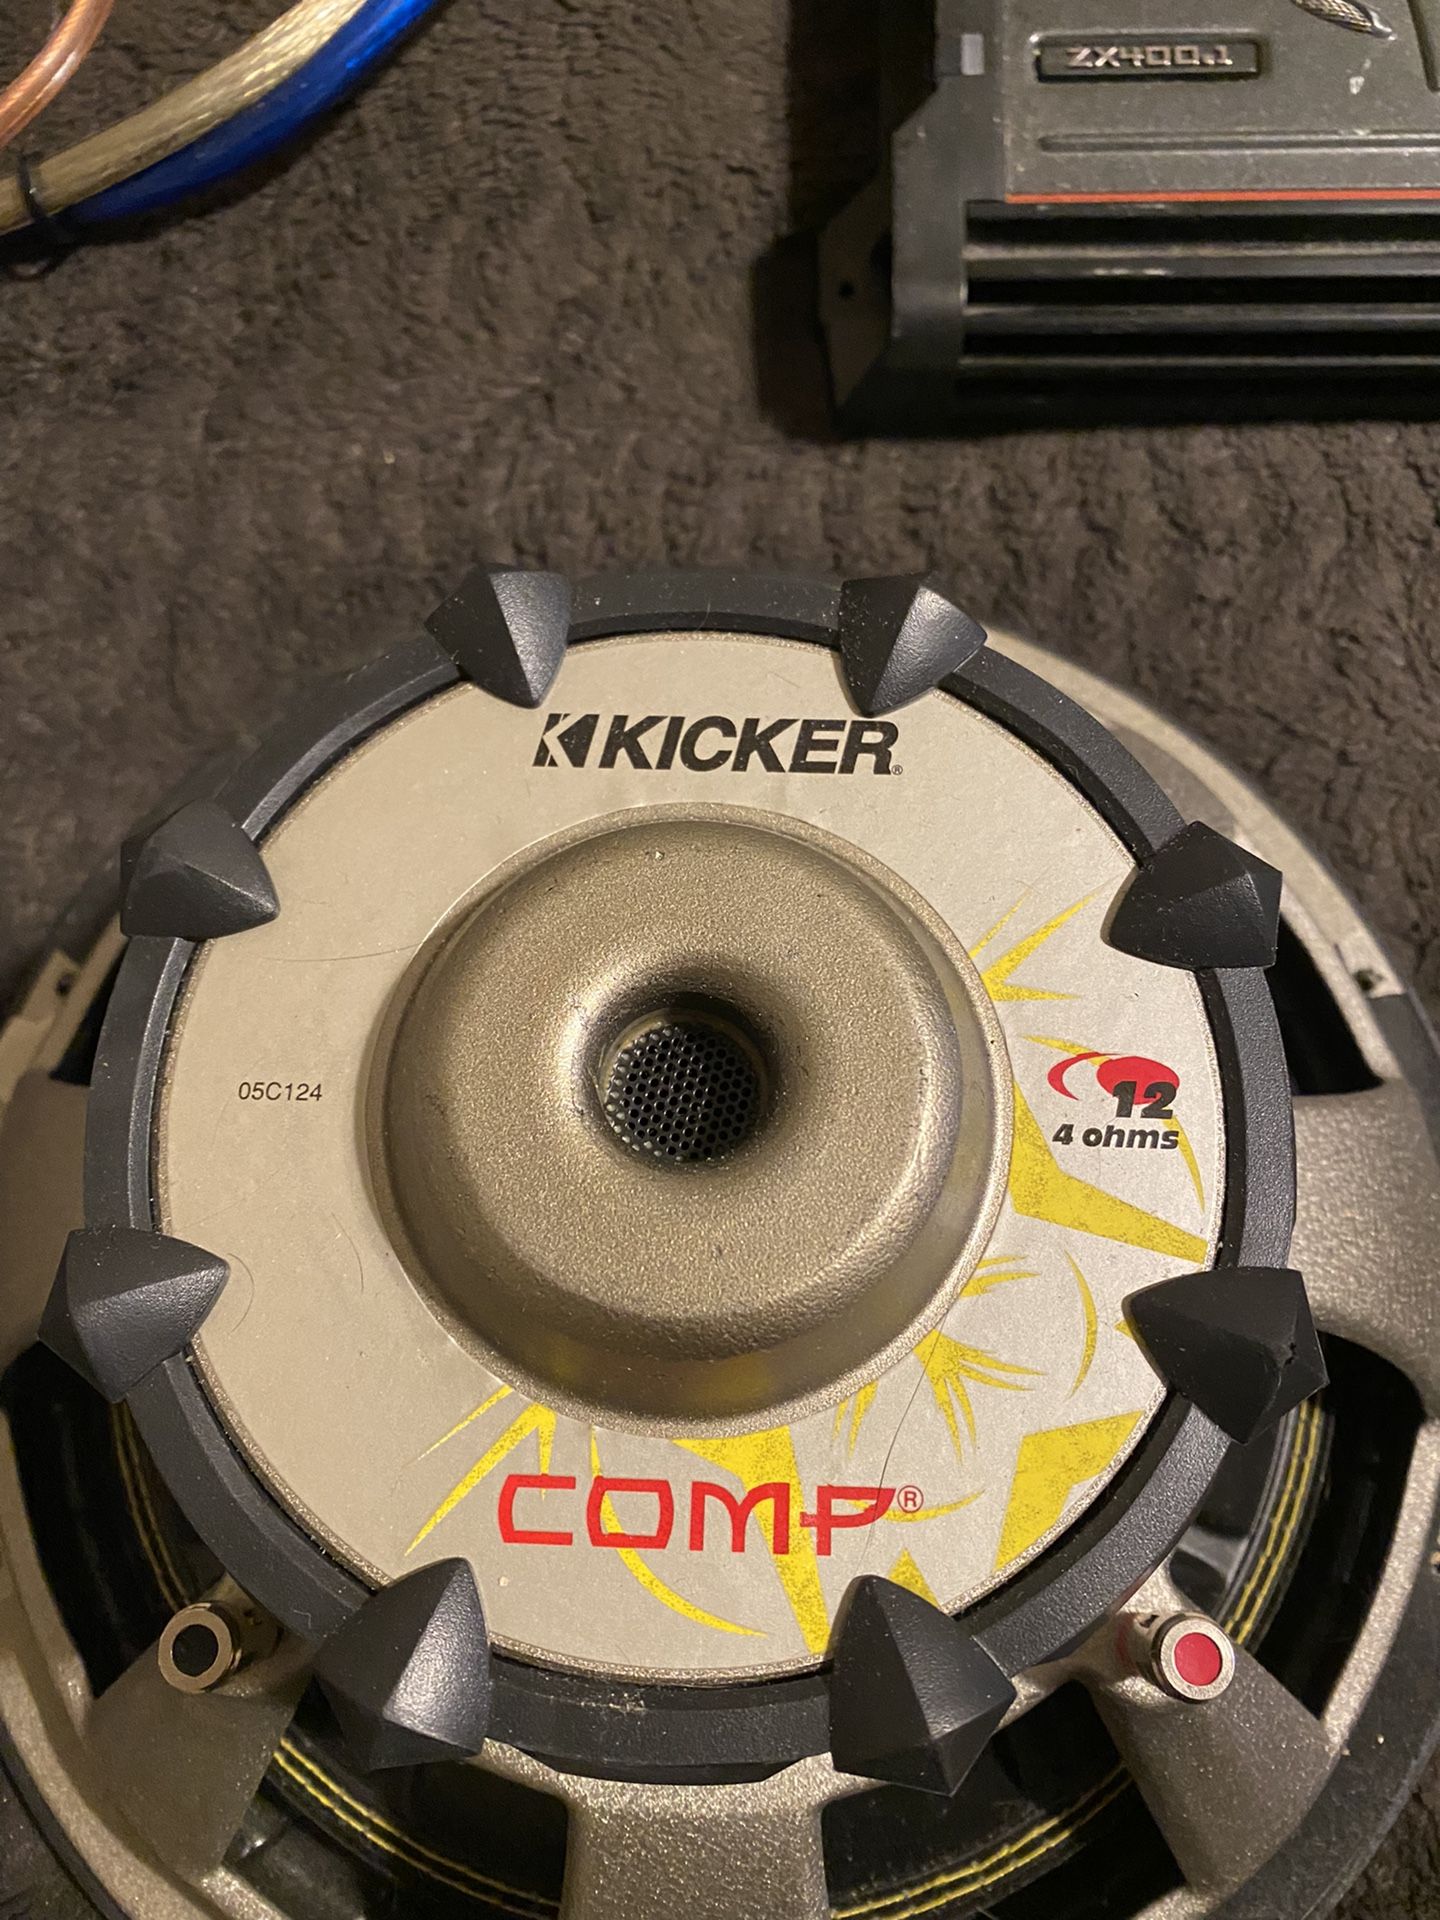 Kicker Amp & Comp 12’s